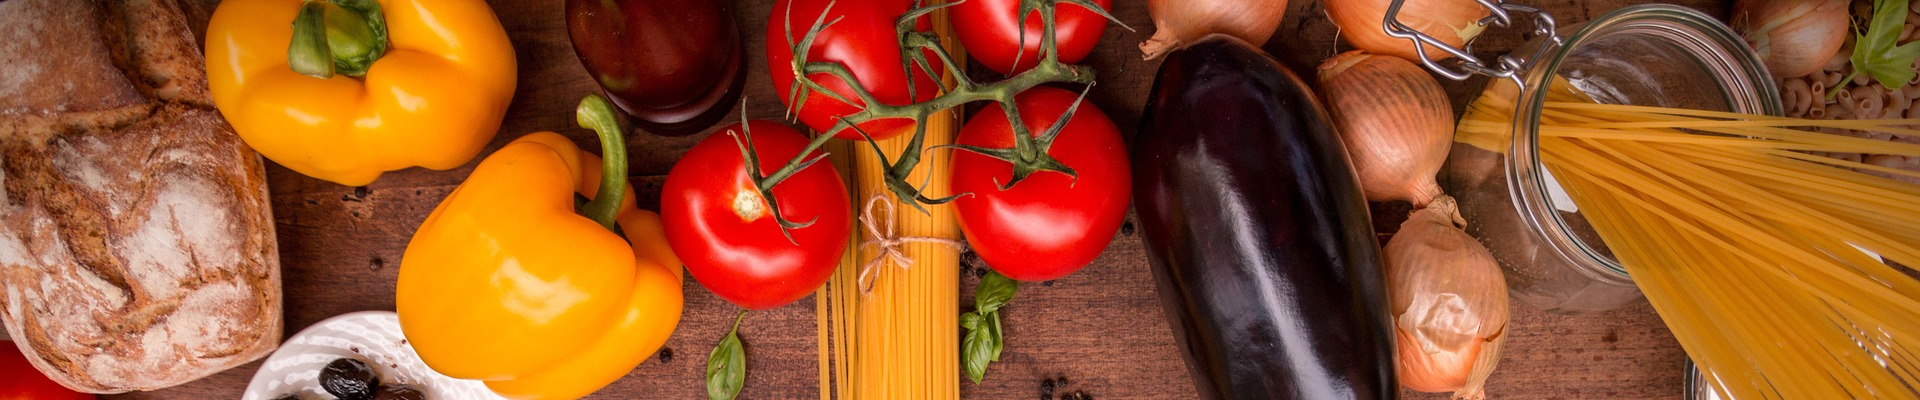 Symbolbild Ernährung: Spaghetti, Tomaten, Paprika, Aubergine, Basilikum, Credit: Pixabay